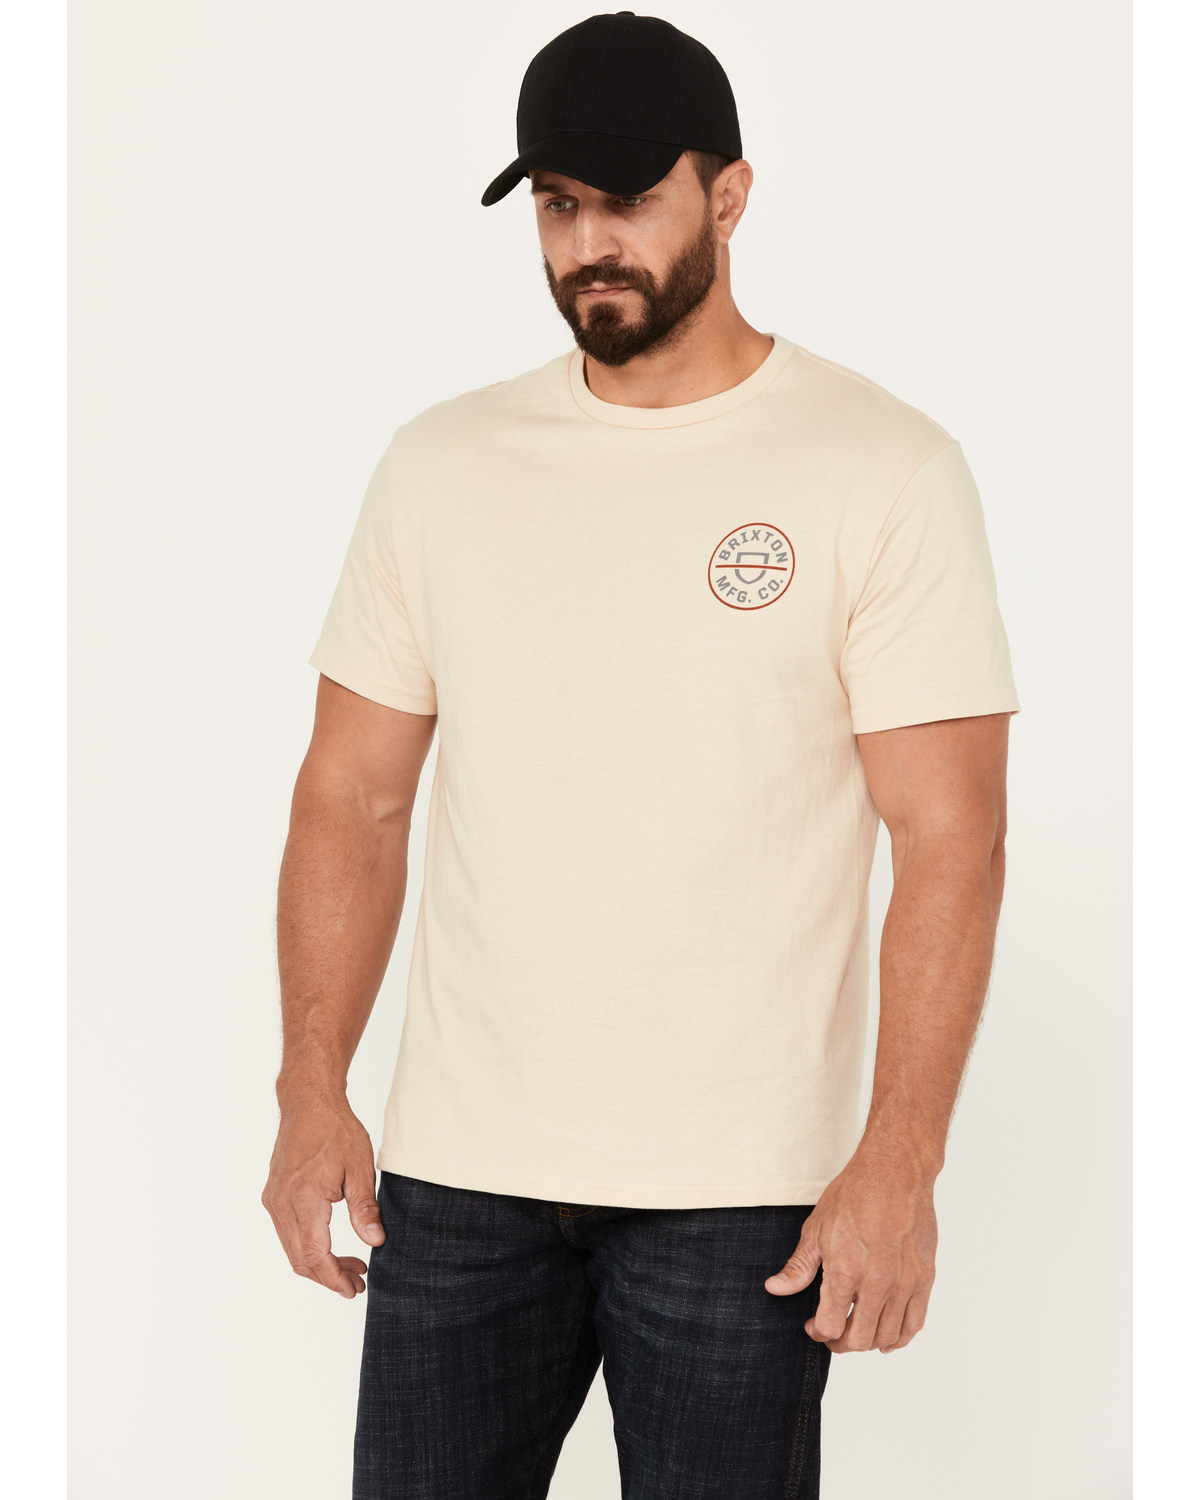 Brixton Men's Crest II Logo Short Sleeve Graphic T-Shirt